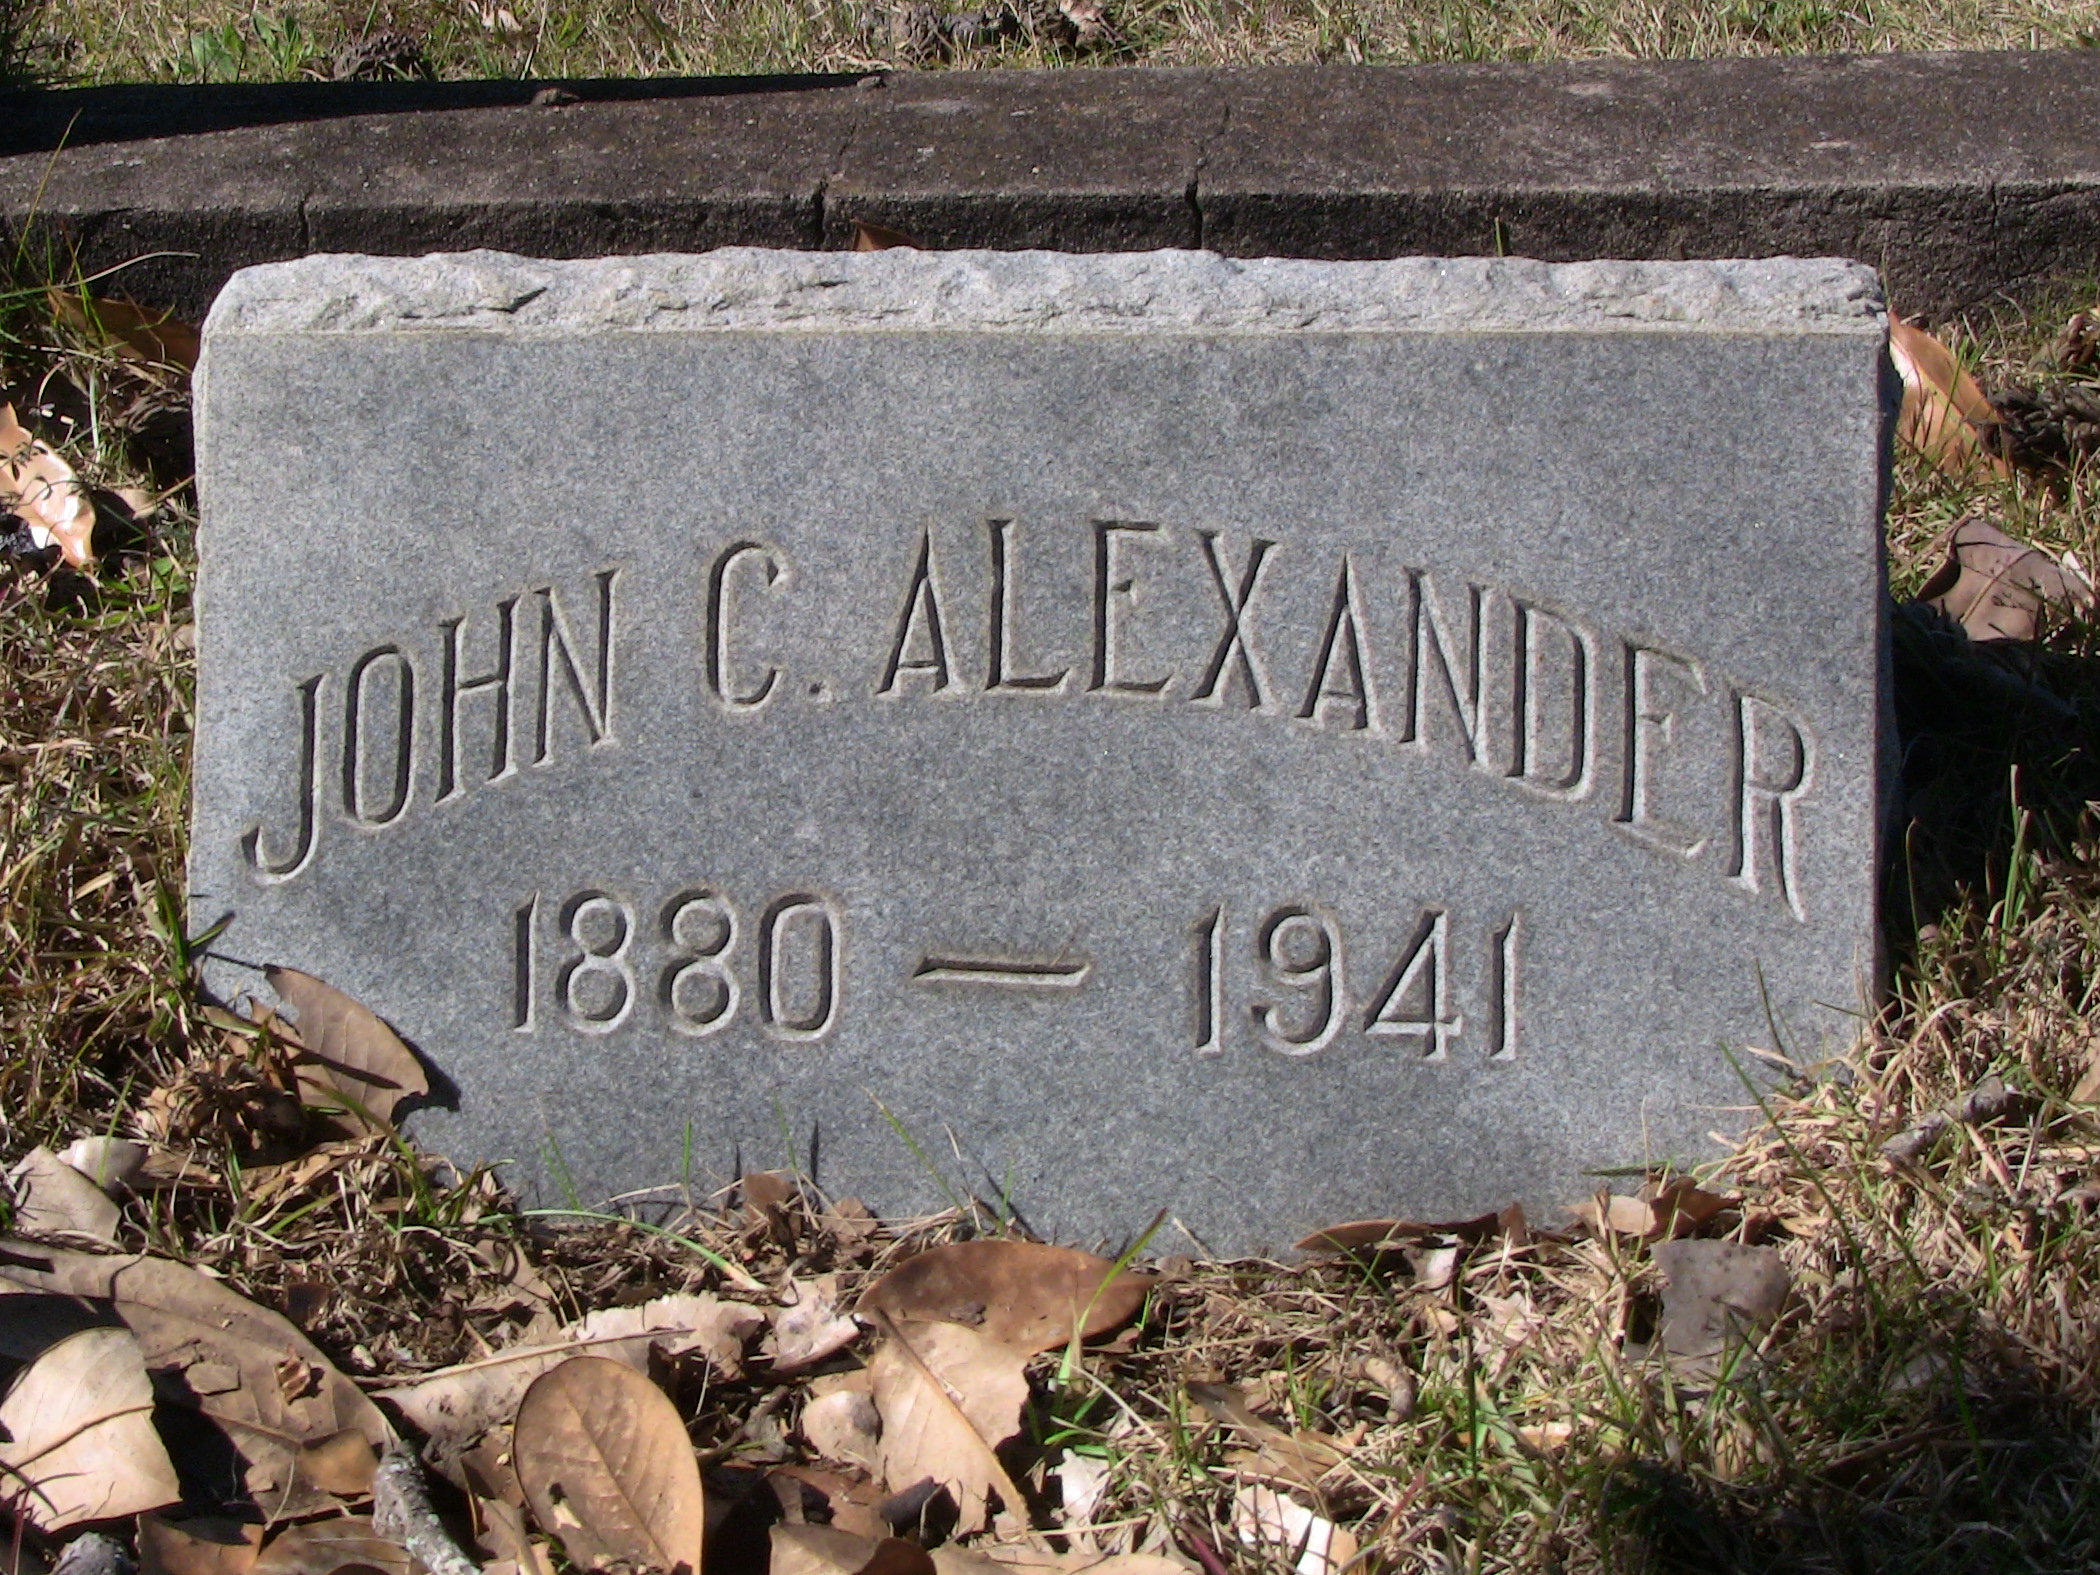 John C. Alexander